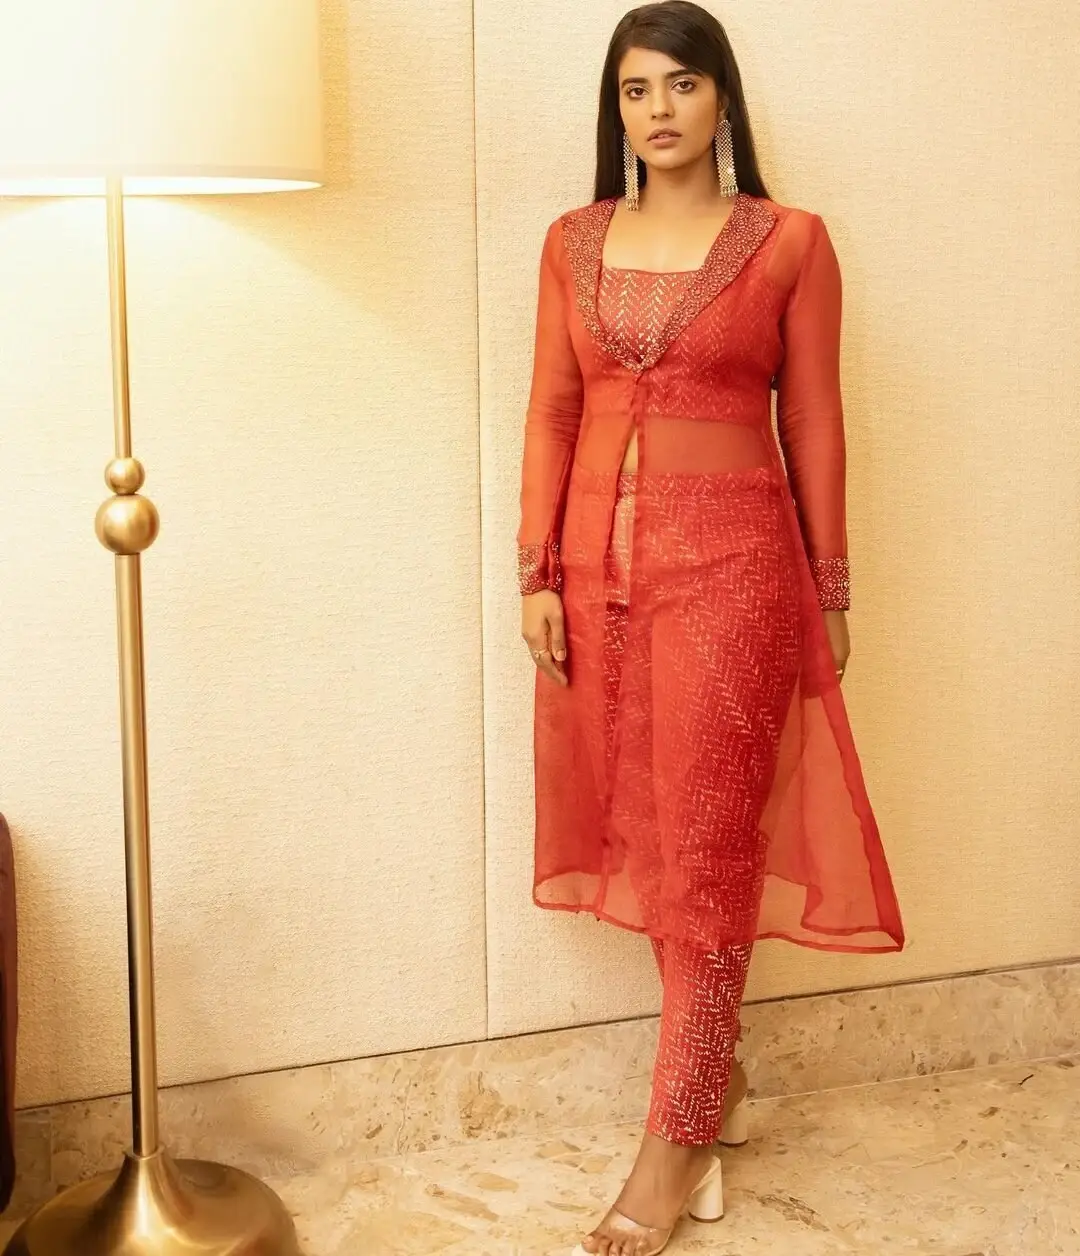 SOUTH INDIAN ACTRESS AISHWARYA RAJESH IN RED DRESS 3